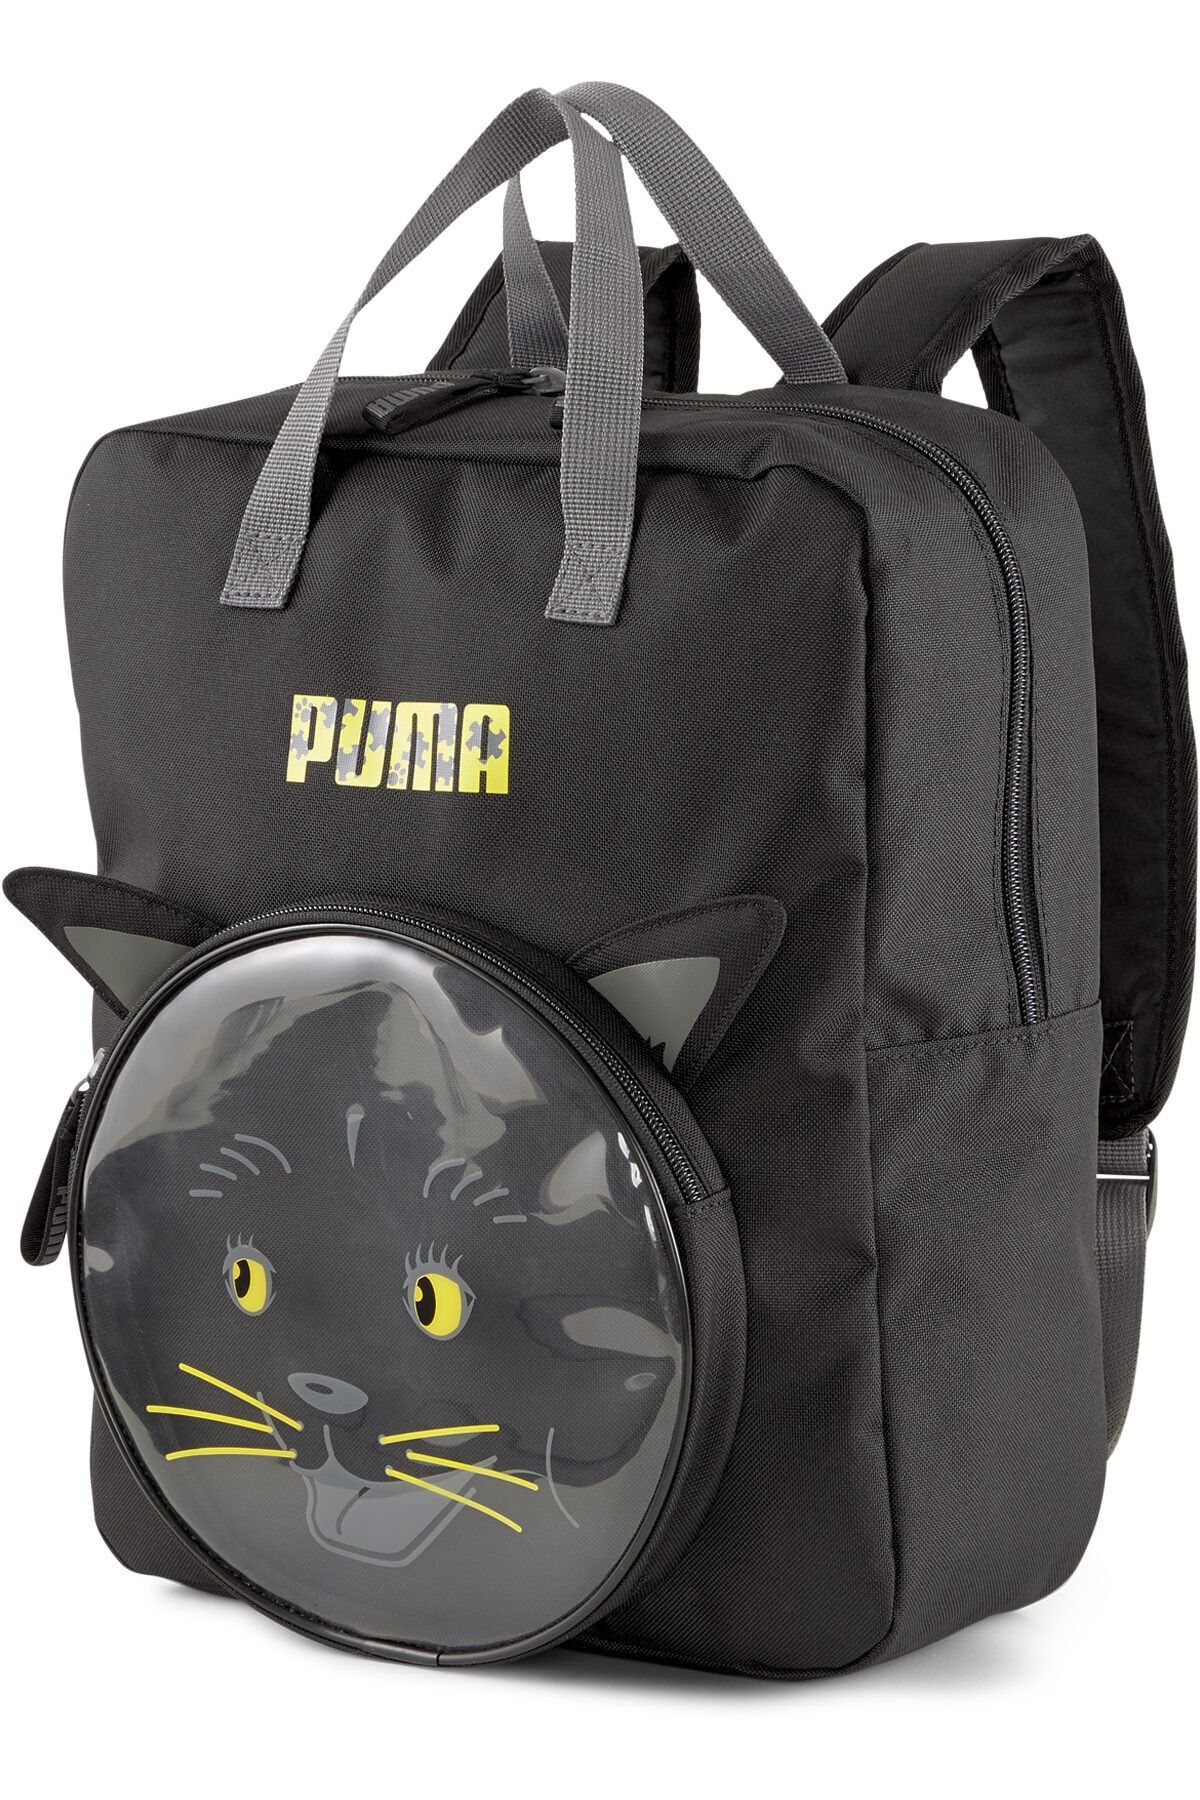 Puma Animals Backpack Puma Black-PANTHER